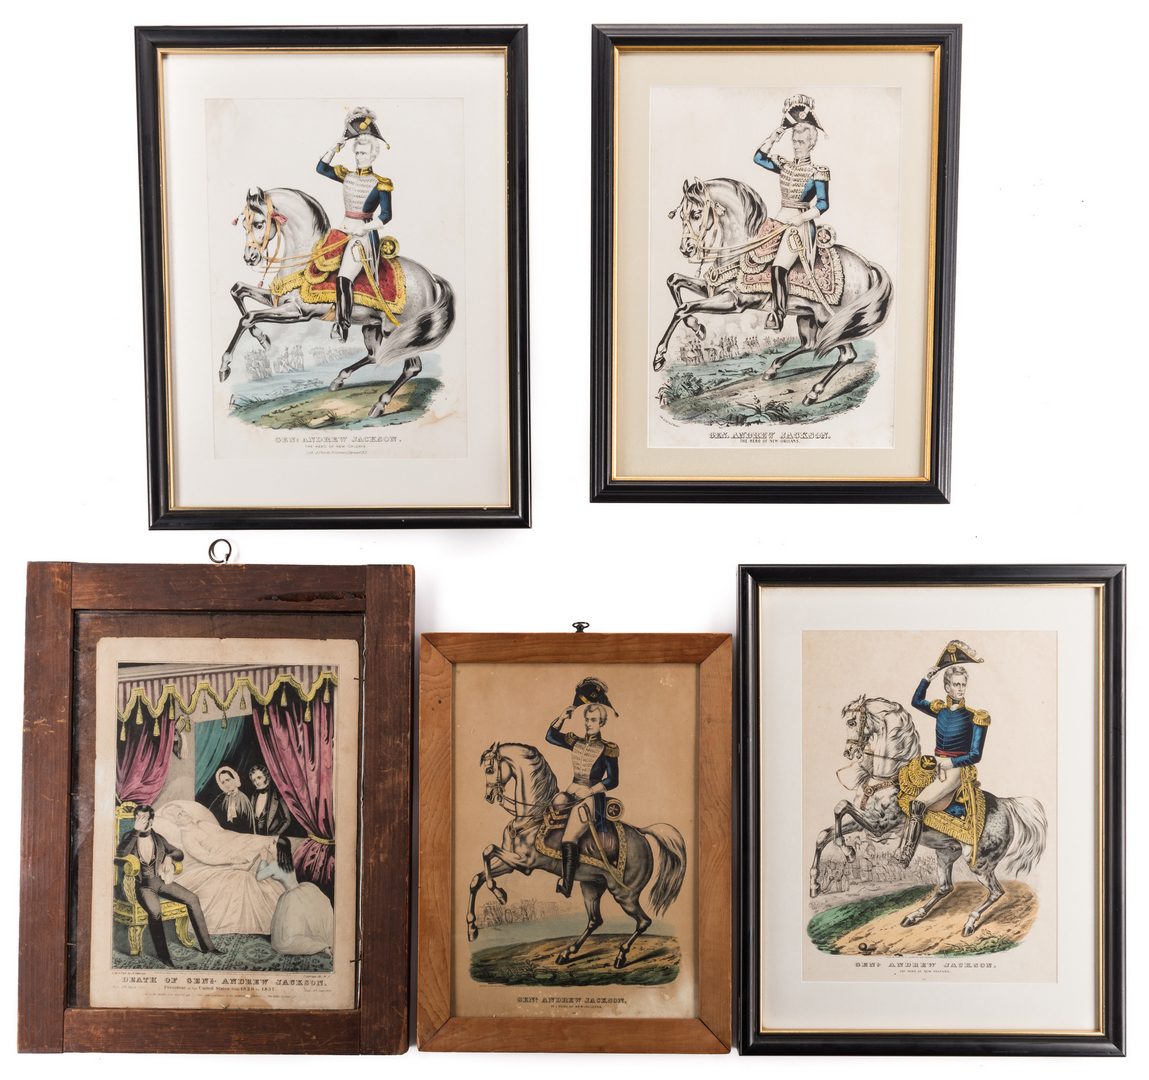 Lot 435: 5 Framed Andrew Jackson Prints